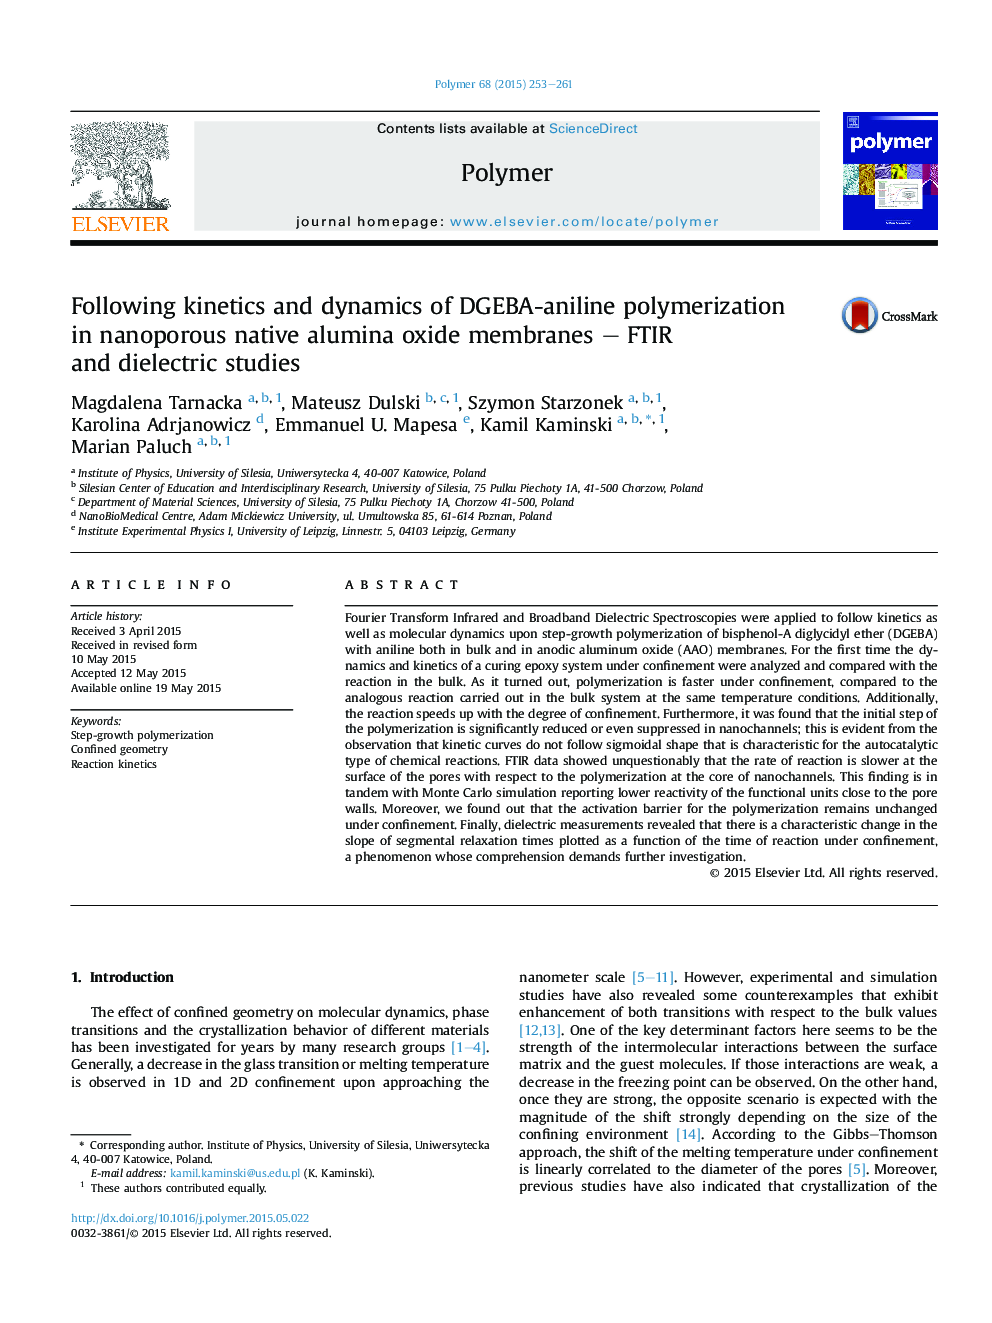 Following kinetics and dynamics of DGEBA-aniline polymerization inÂ nanoporous native alumina oxide membranes - FTIR andÂ dielectricÂ studies